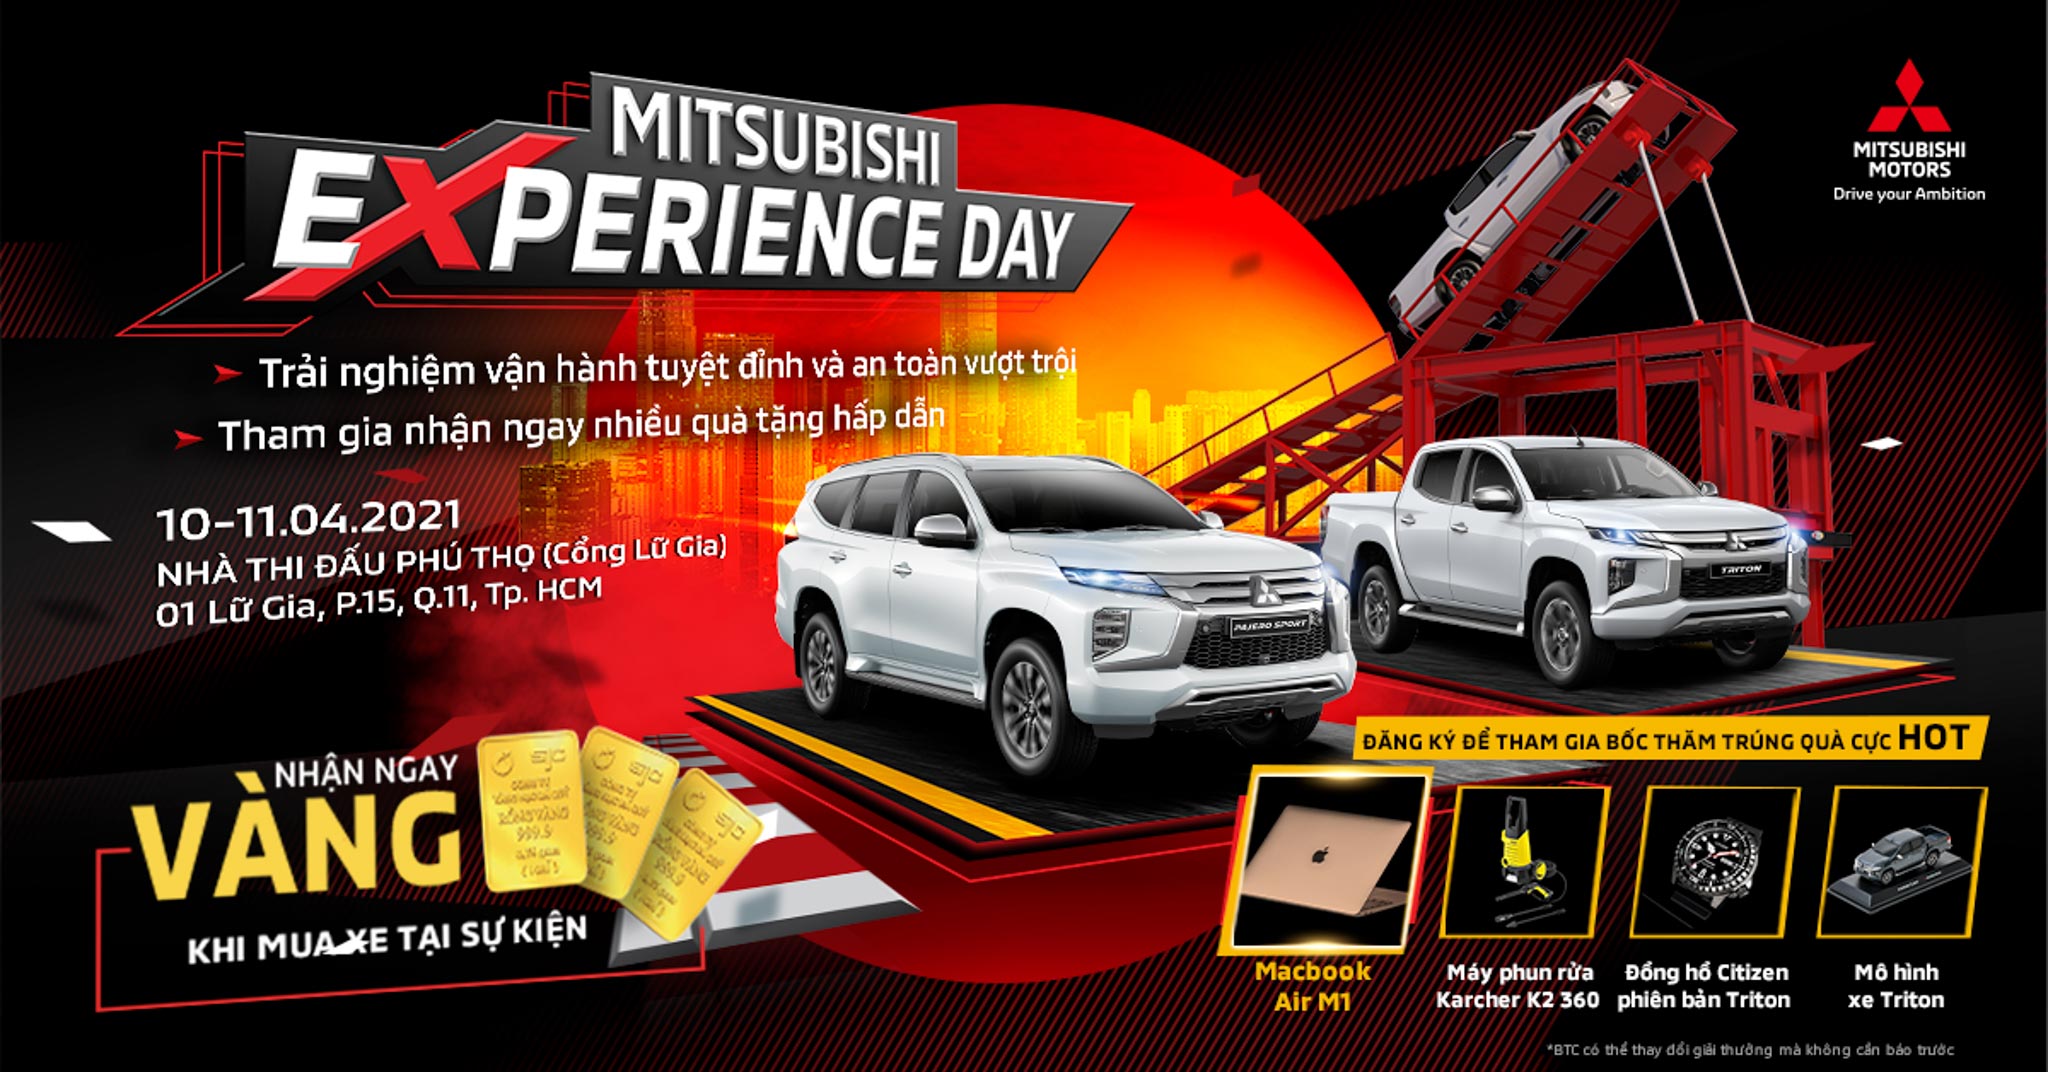 XEtv-Mitsubishi-Experience-Day-2021-7.jpg